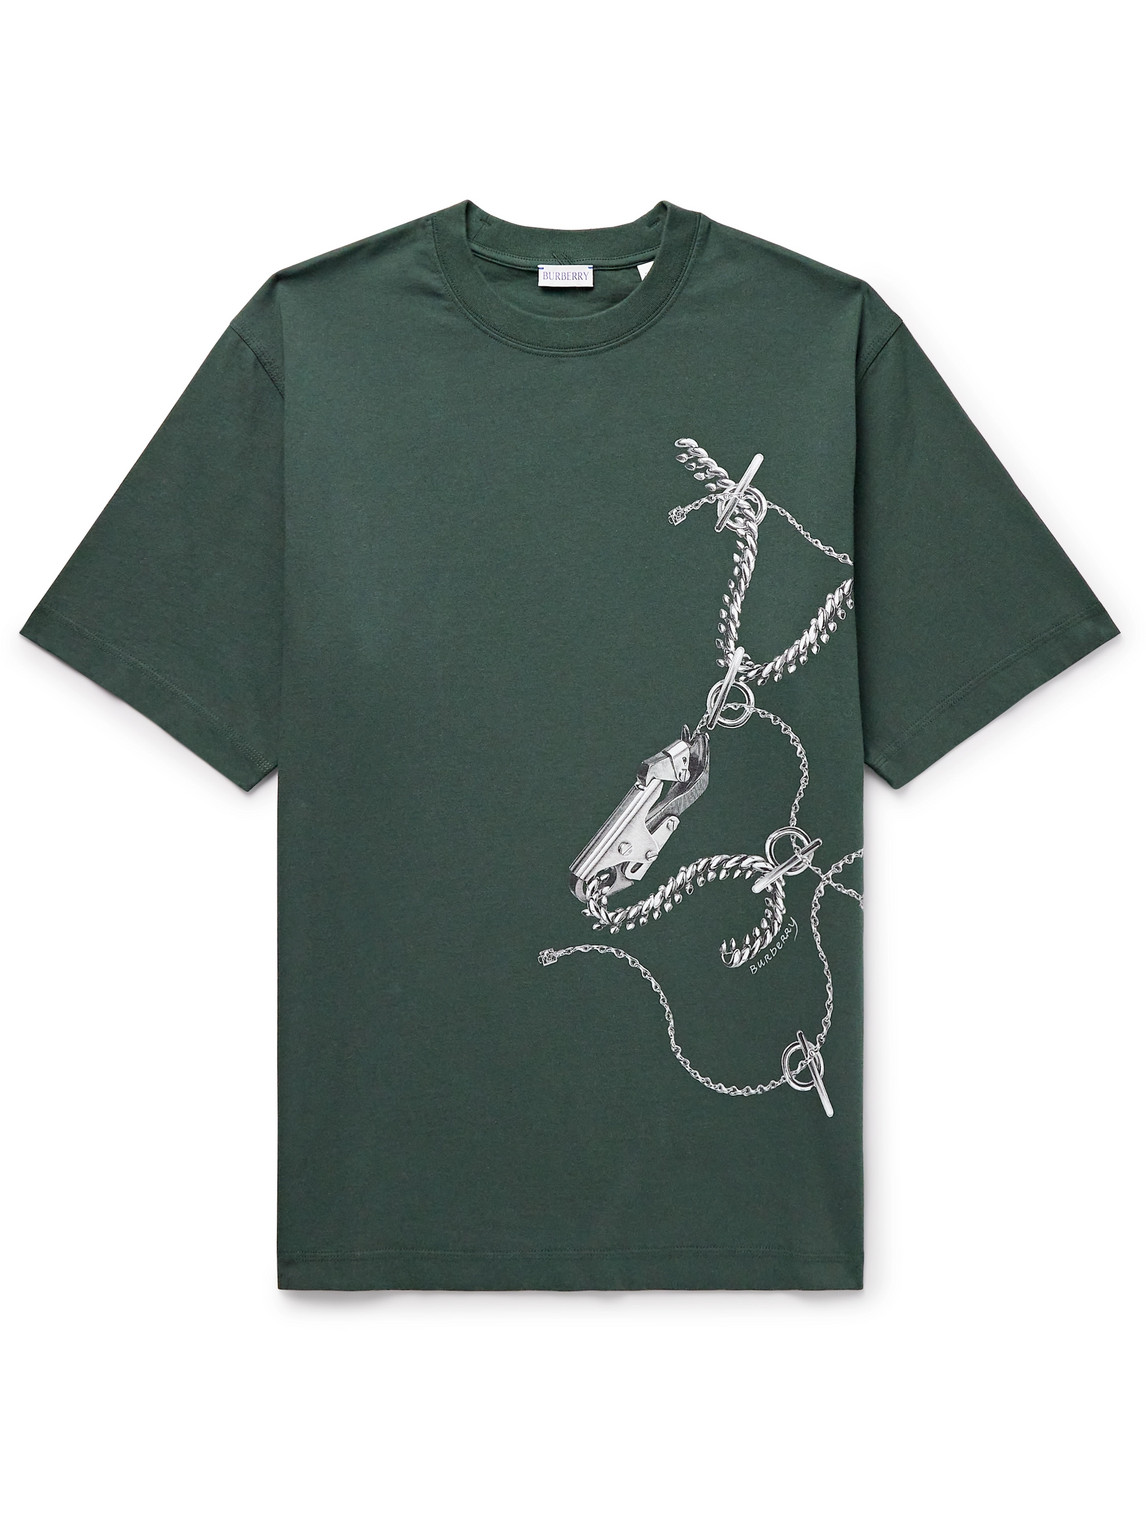 Burberry - Printed Cotton-Jersey T-Shirt - Men - Green - M von Burberry